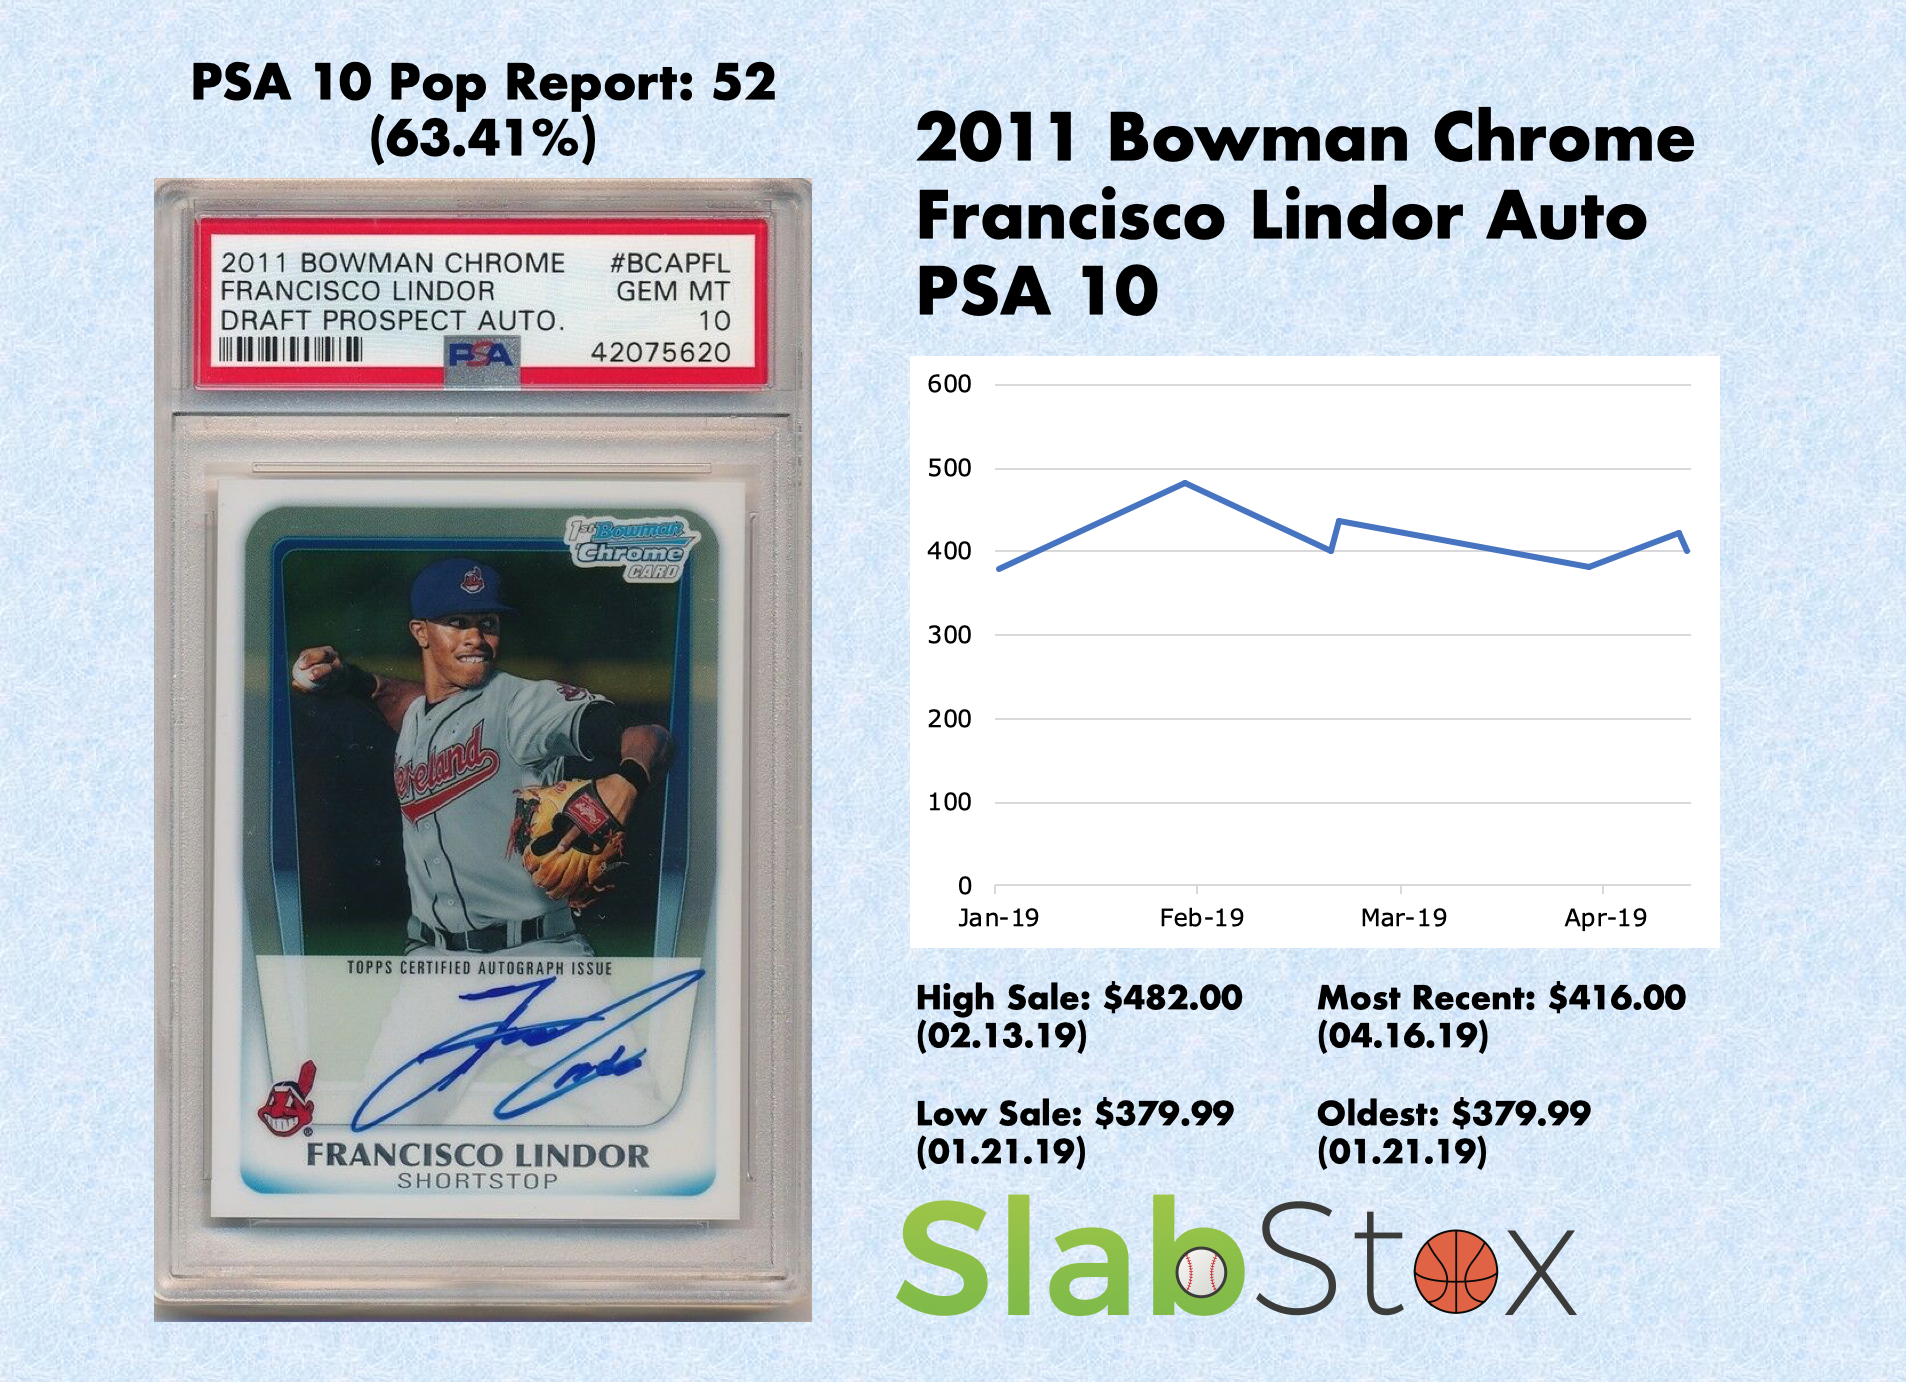 SlabStox infographic for 20111 Bowman Chrome Francisco Lindor Auto PSA 10 sports trading card